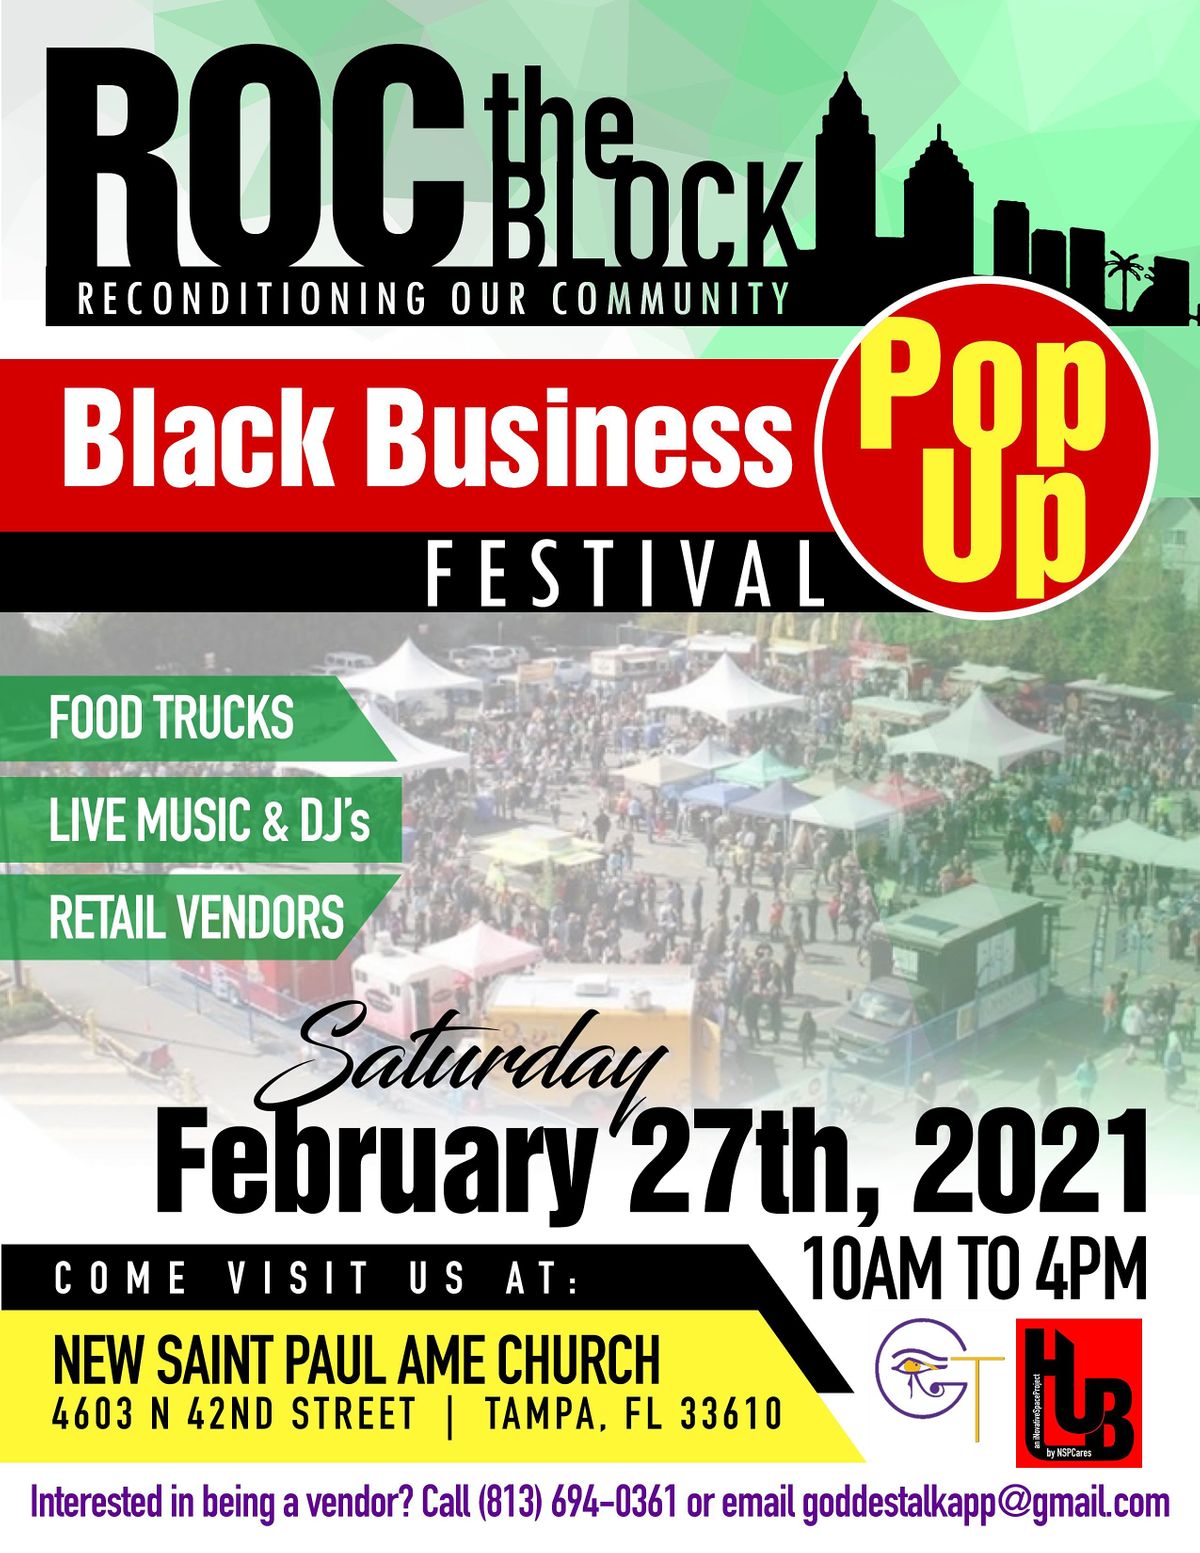 R.O.C. TheBlock Black Business PopUp Festival